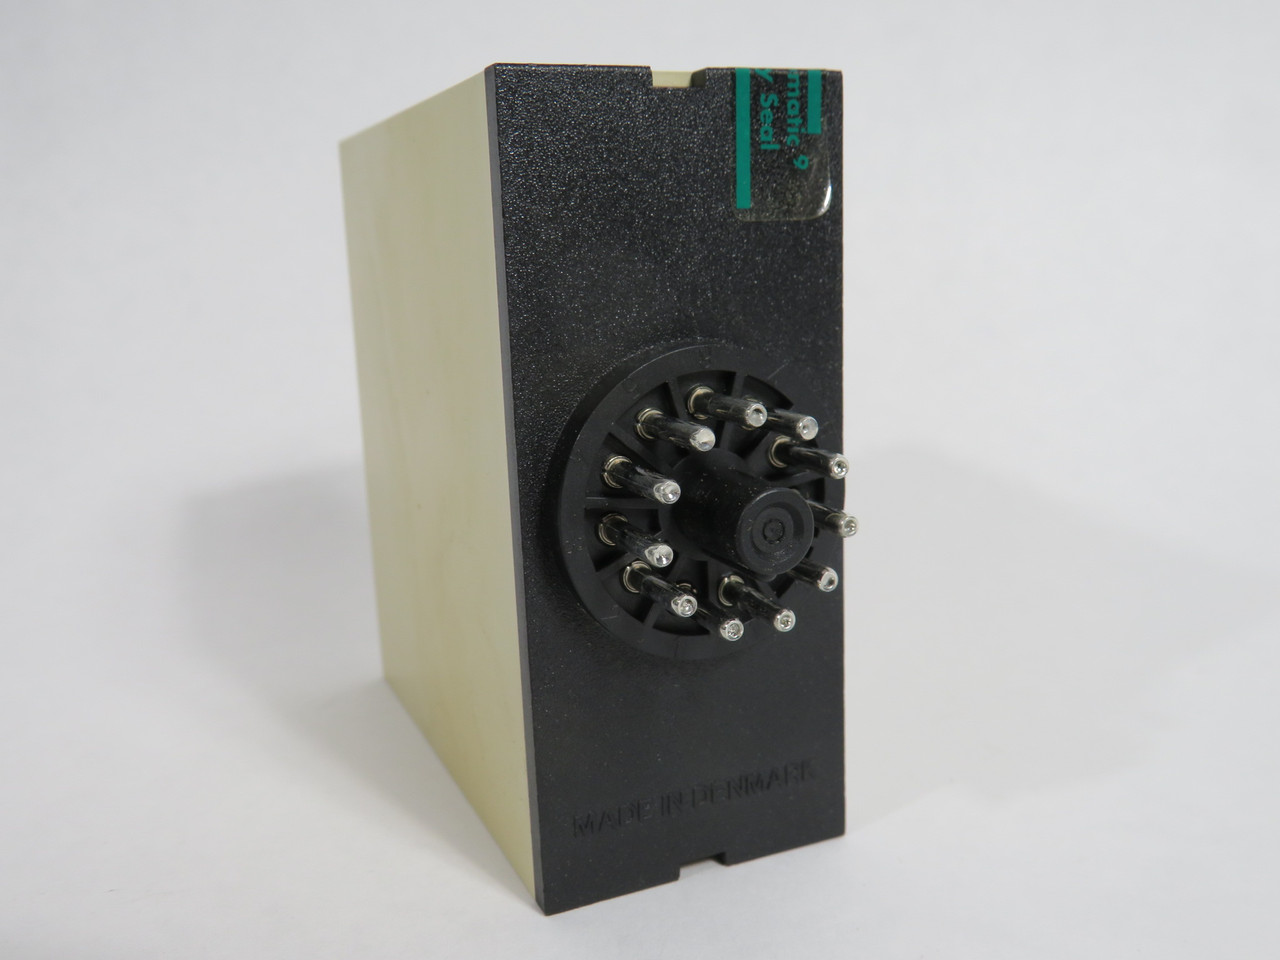 Electromatic SL160230 Bistable Logic Relay 1 Input 230V 50/60Hz 11-Pin NOP